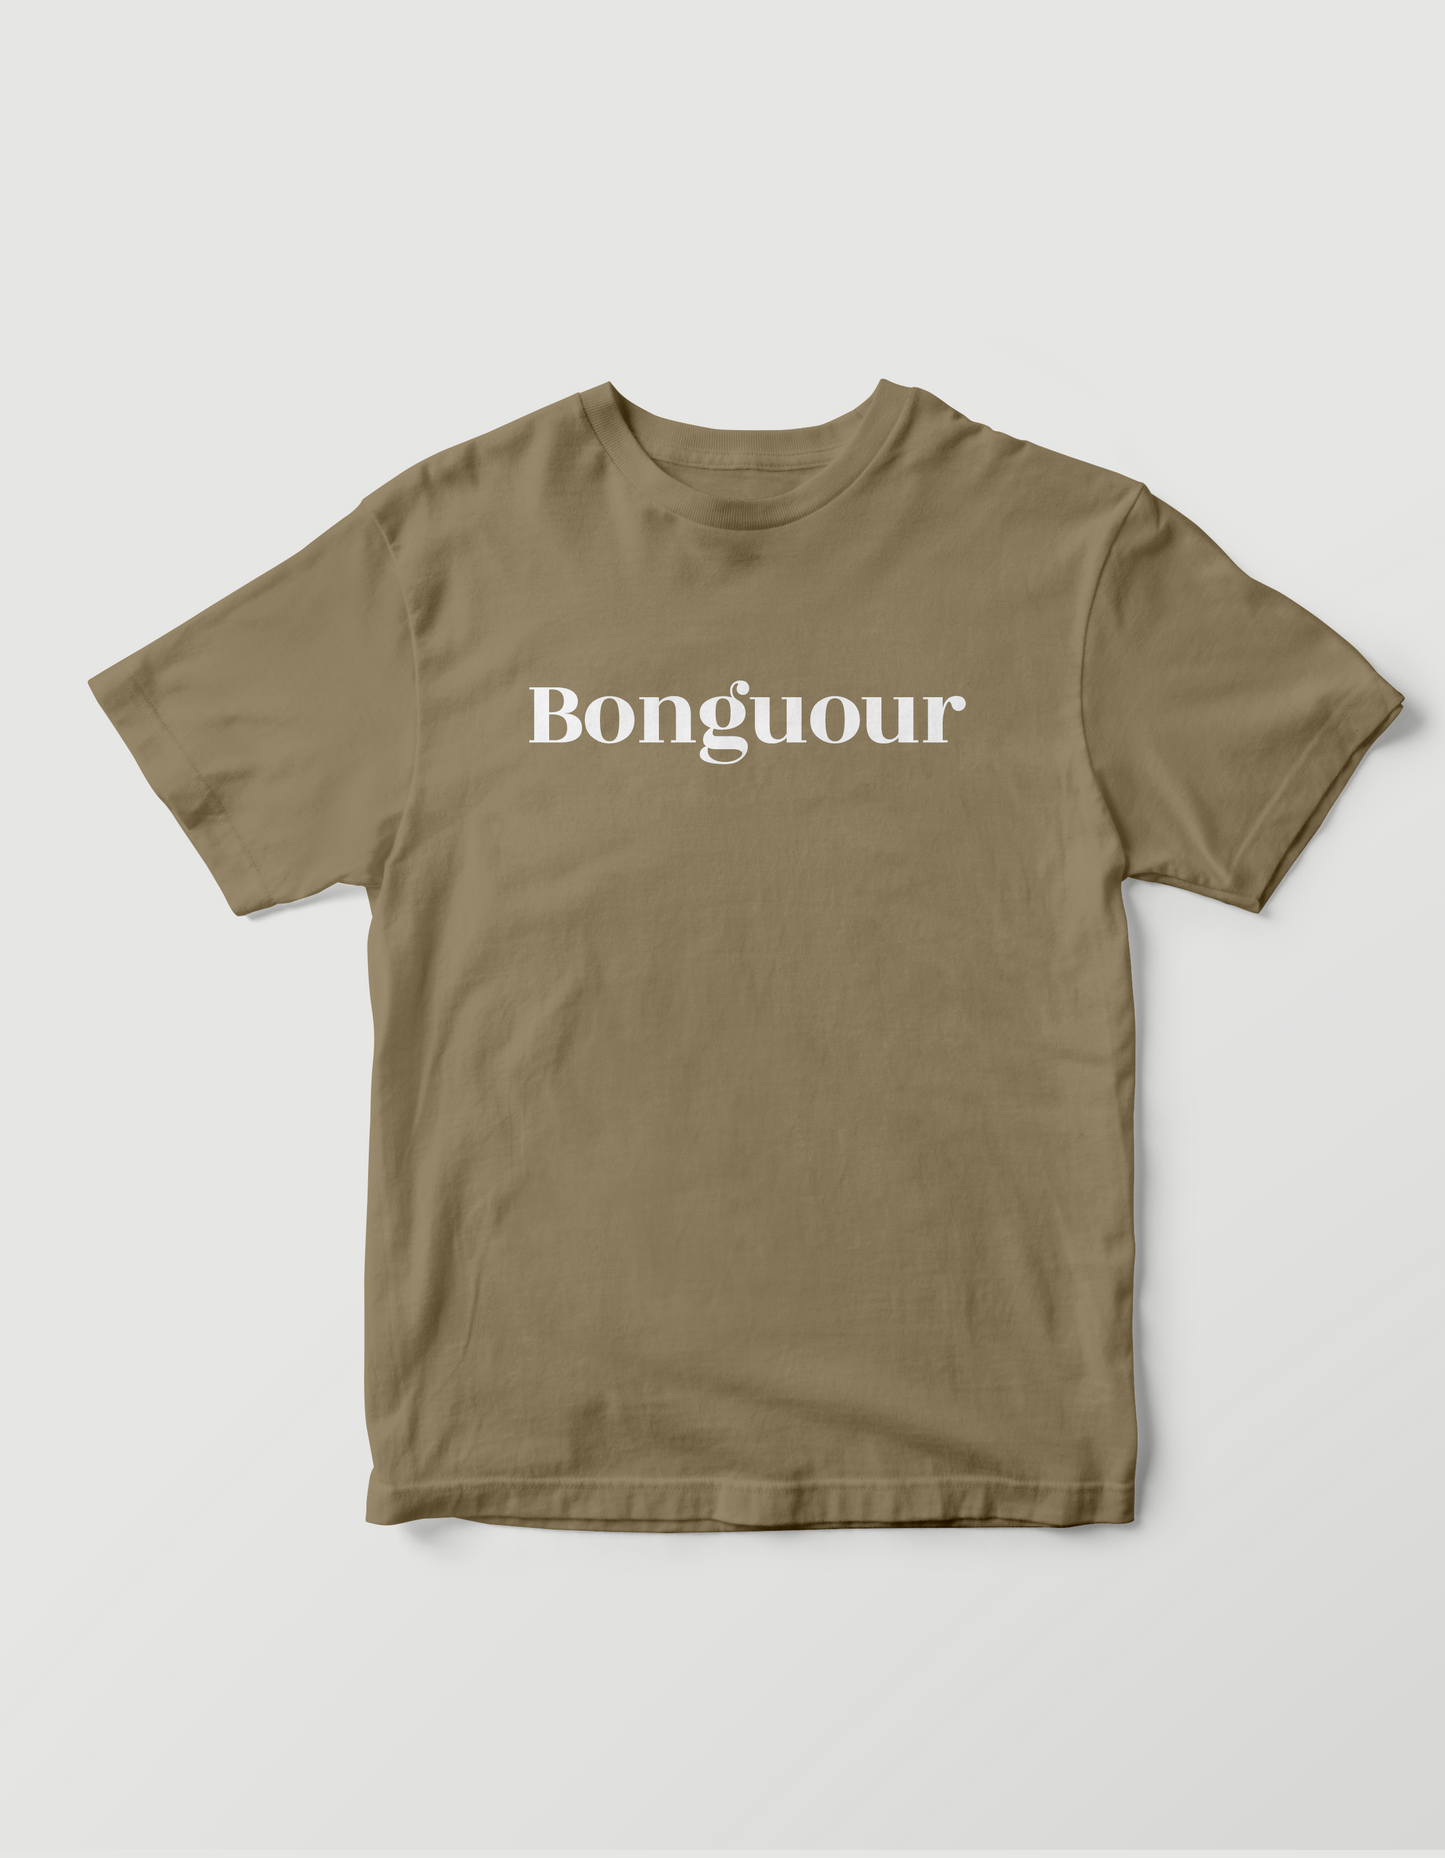 Tee-shirt adulte Bonguour (le bestseller)